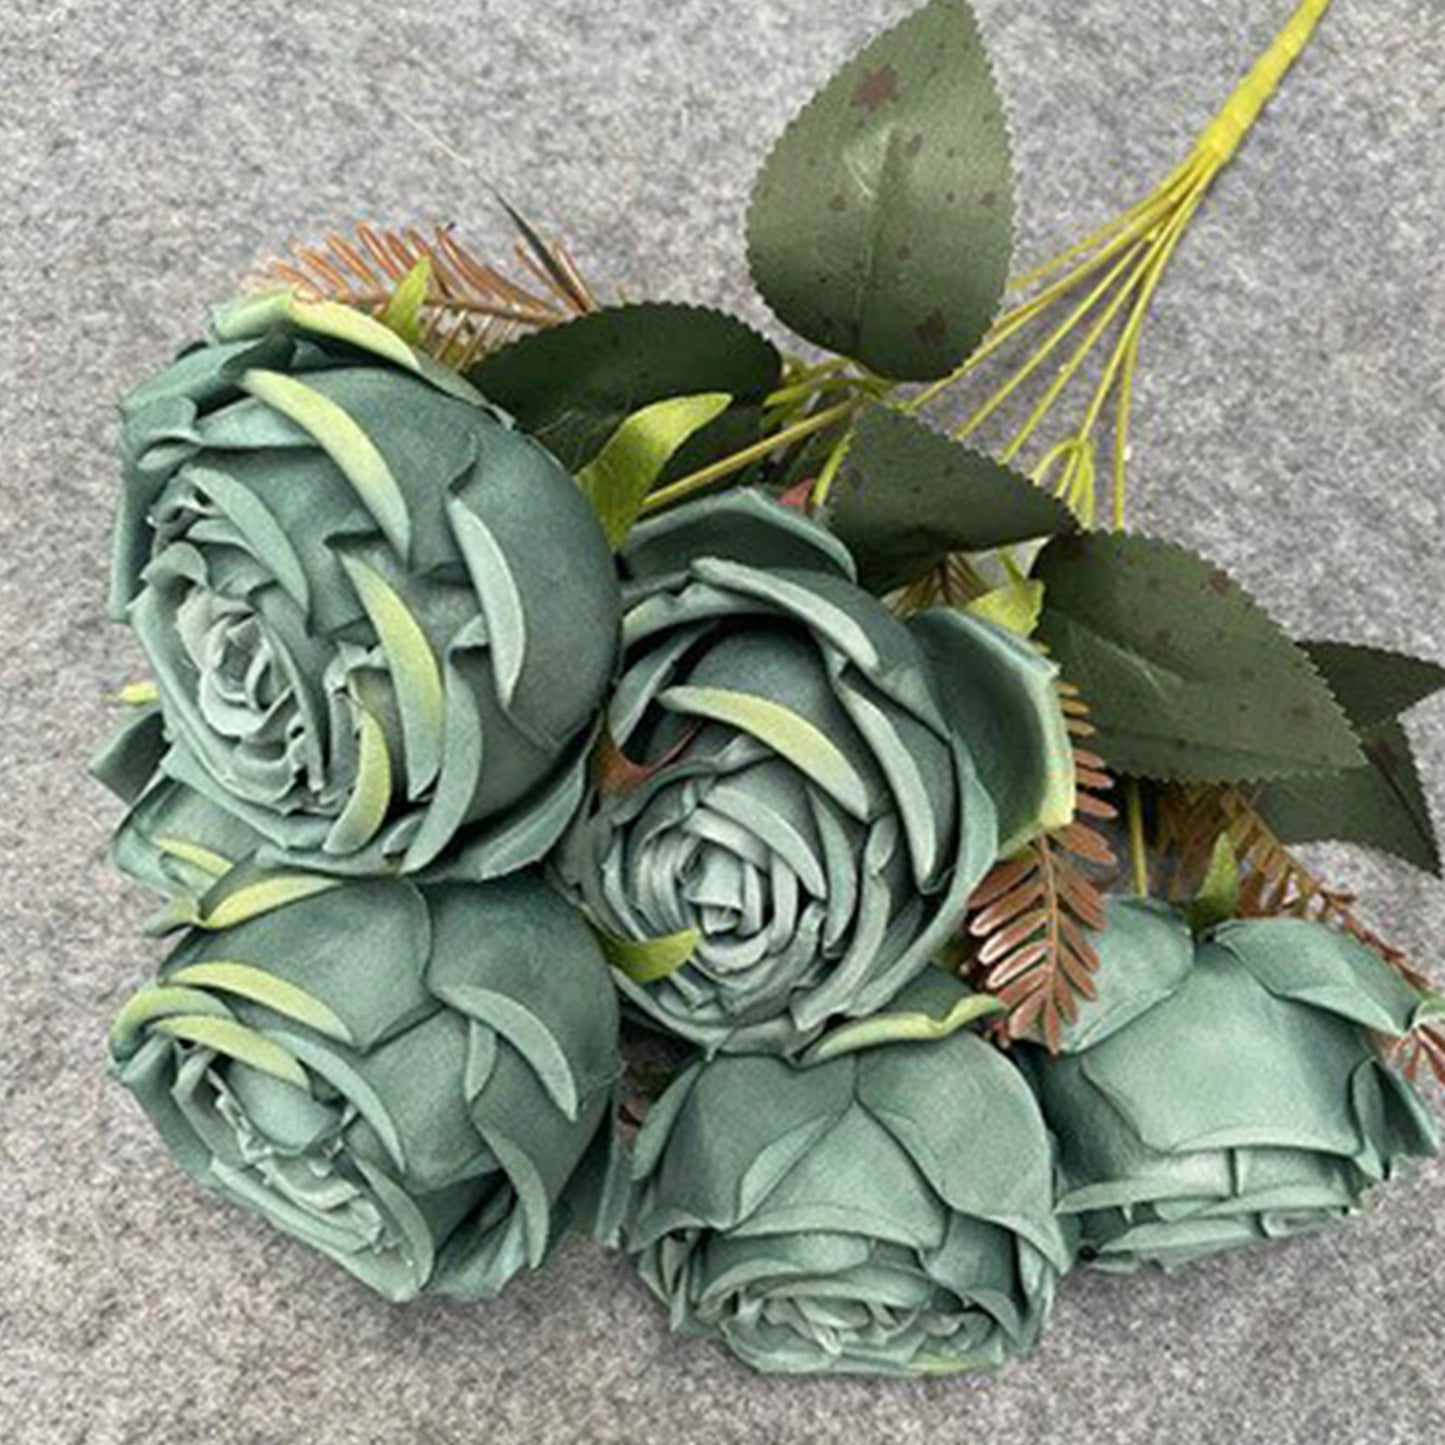 17.7" Real Touch Faux Rose Bouquet | 7 Colors